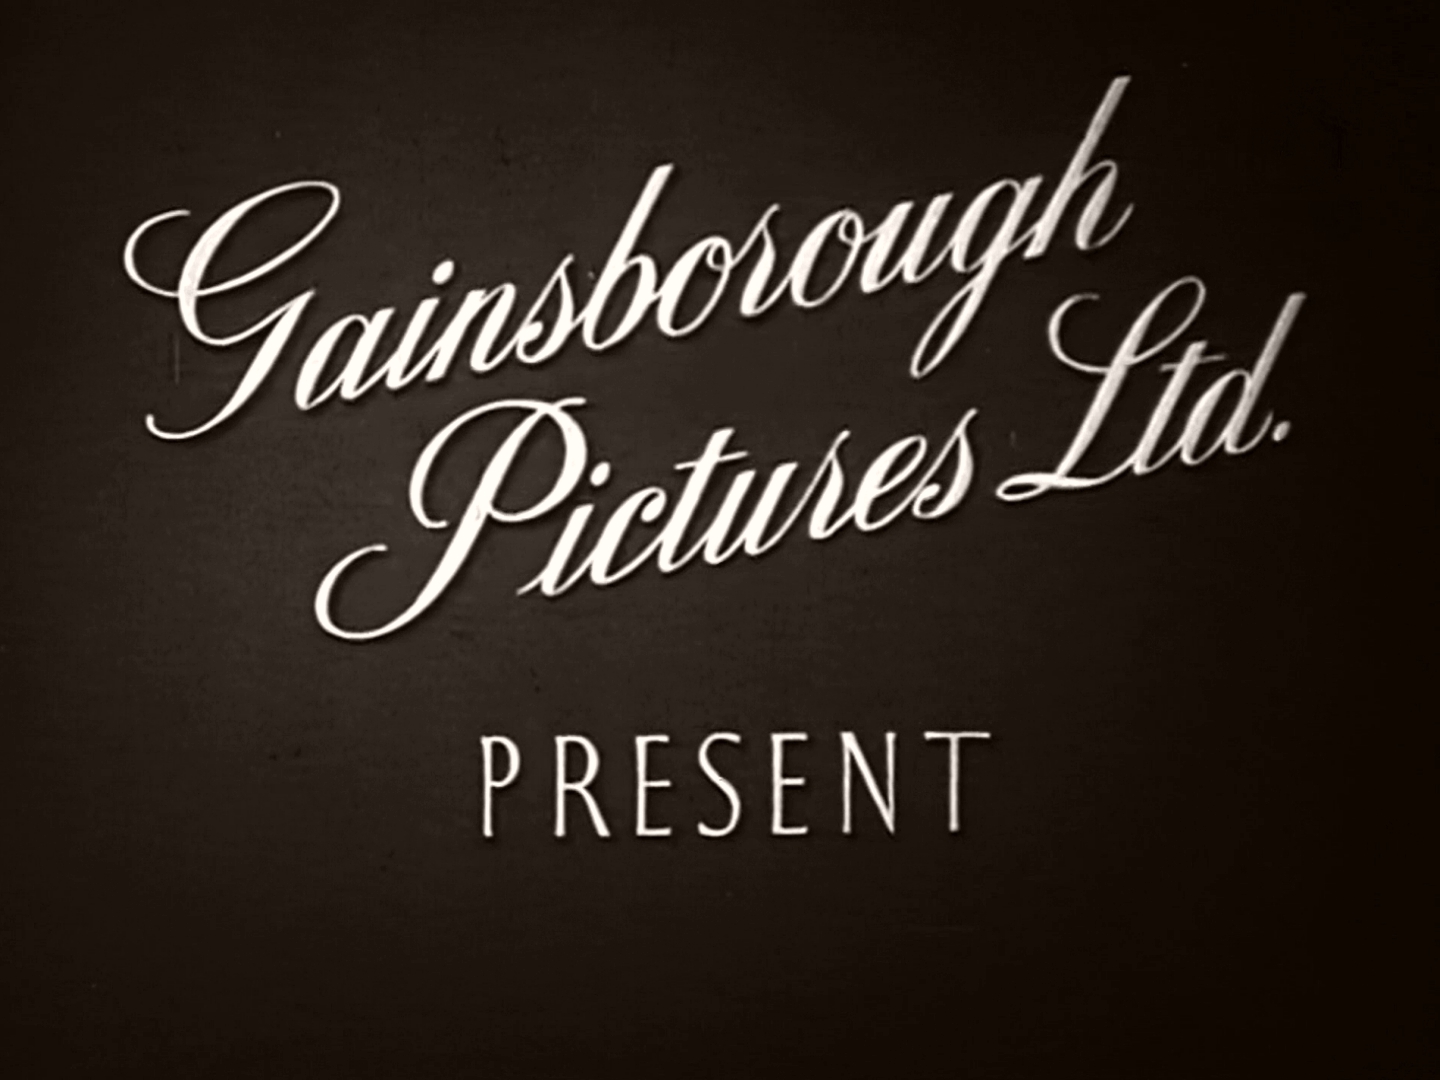 Main title from Caravan (1946) (1). Gainsborough Pictures present